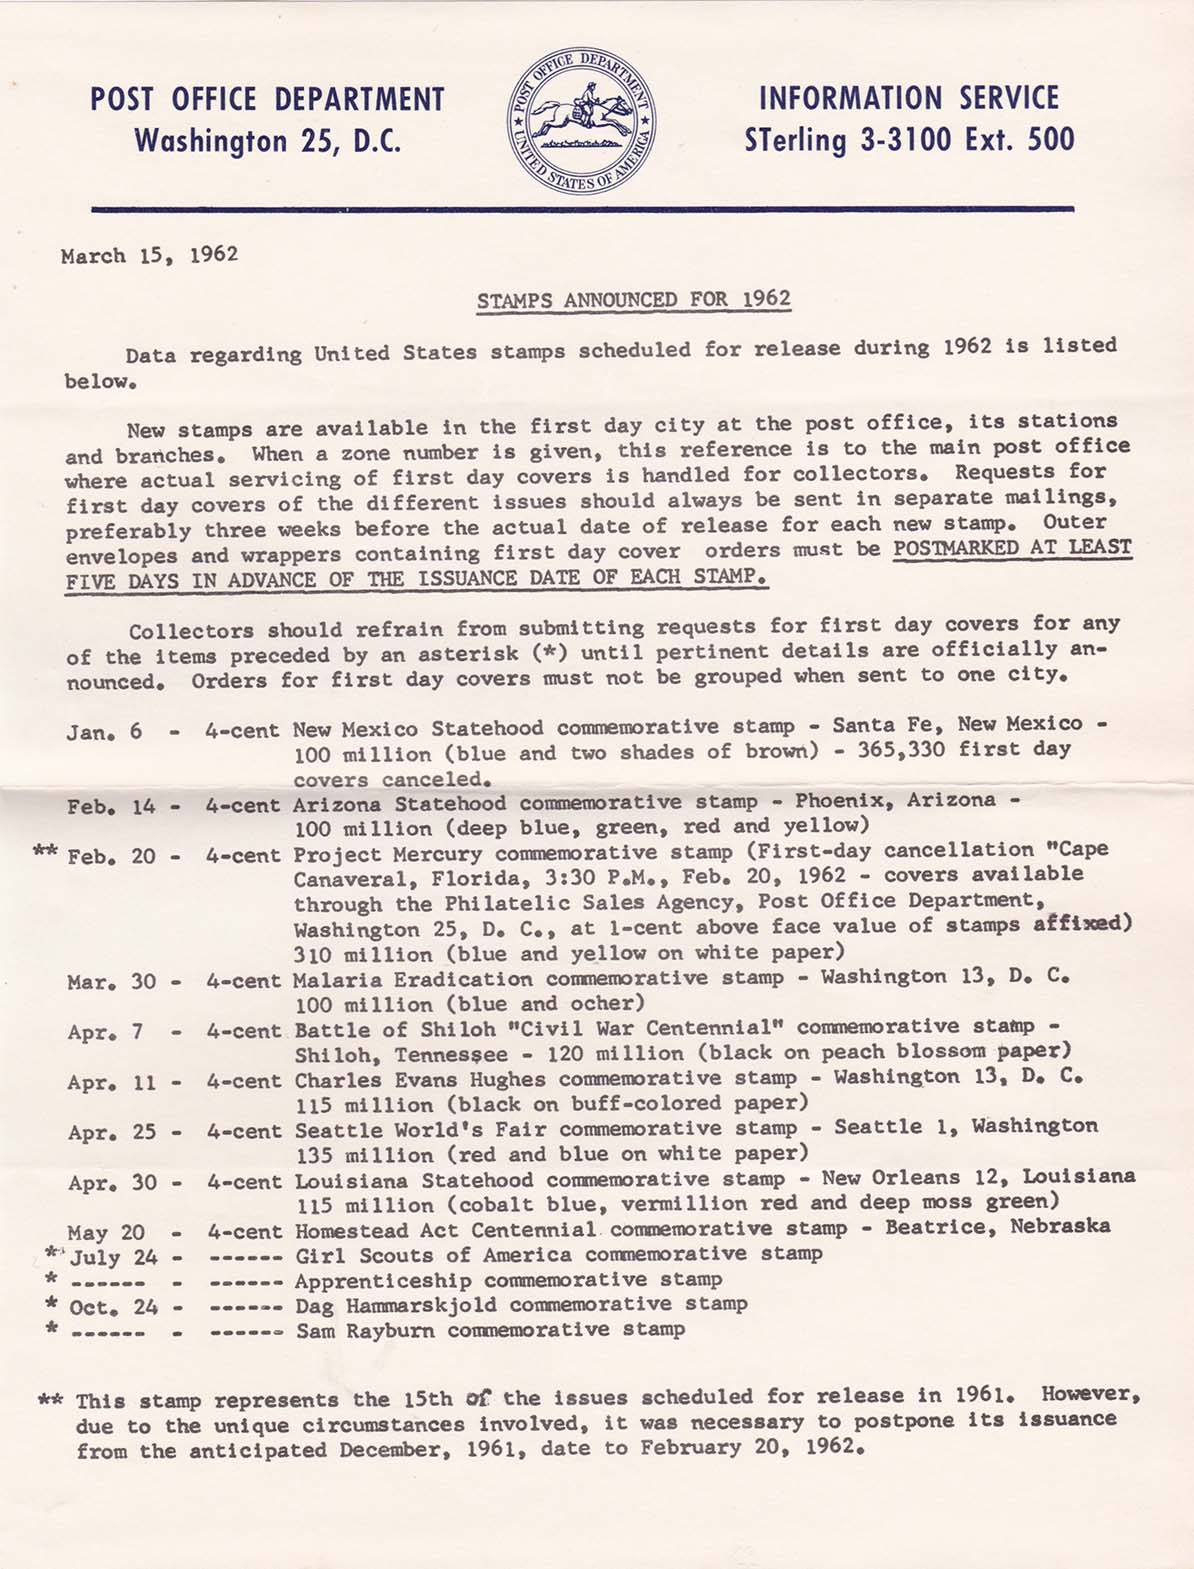 POD Information Service - March 15, 1962